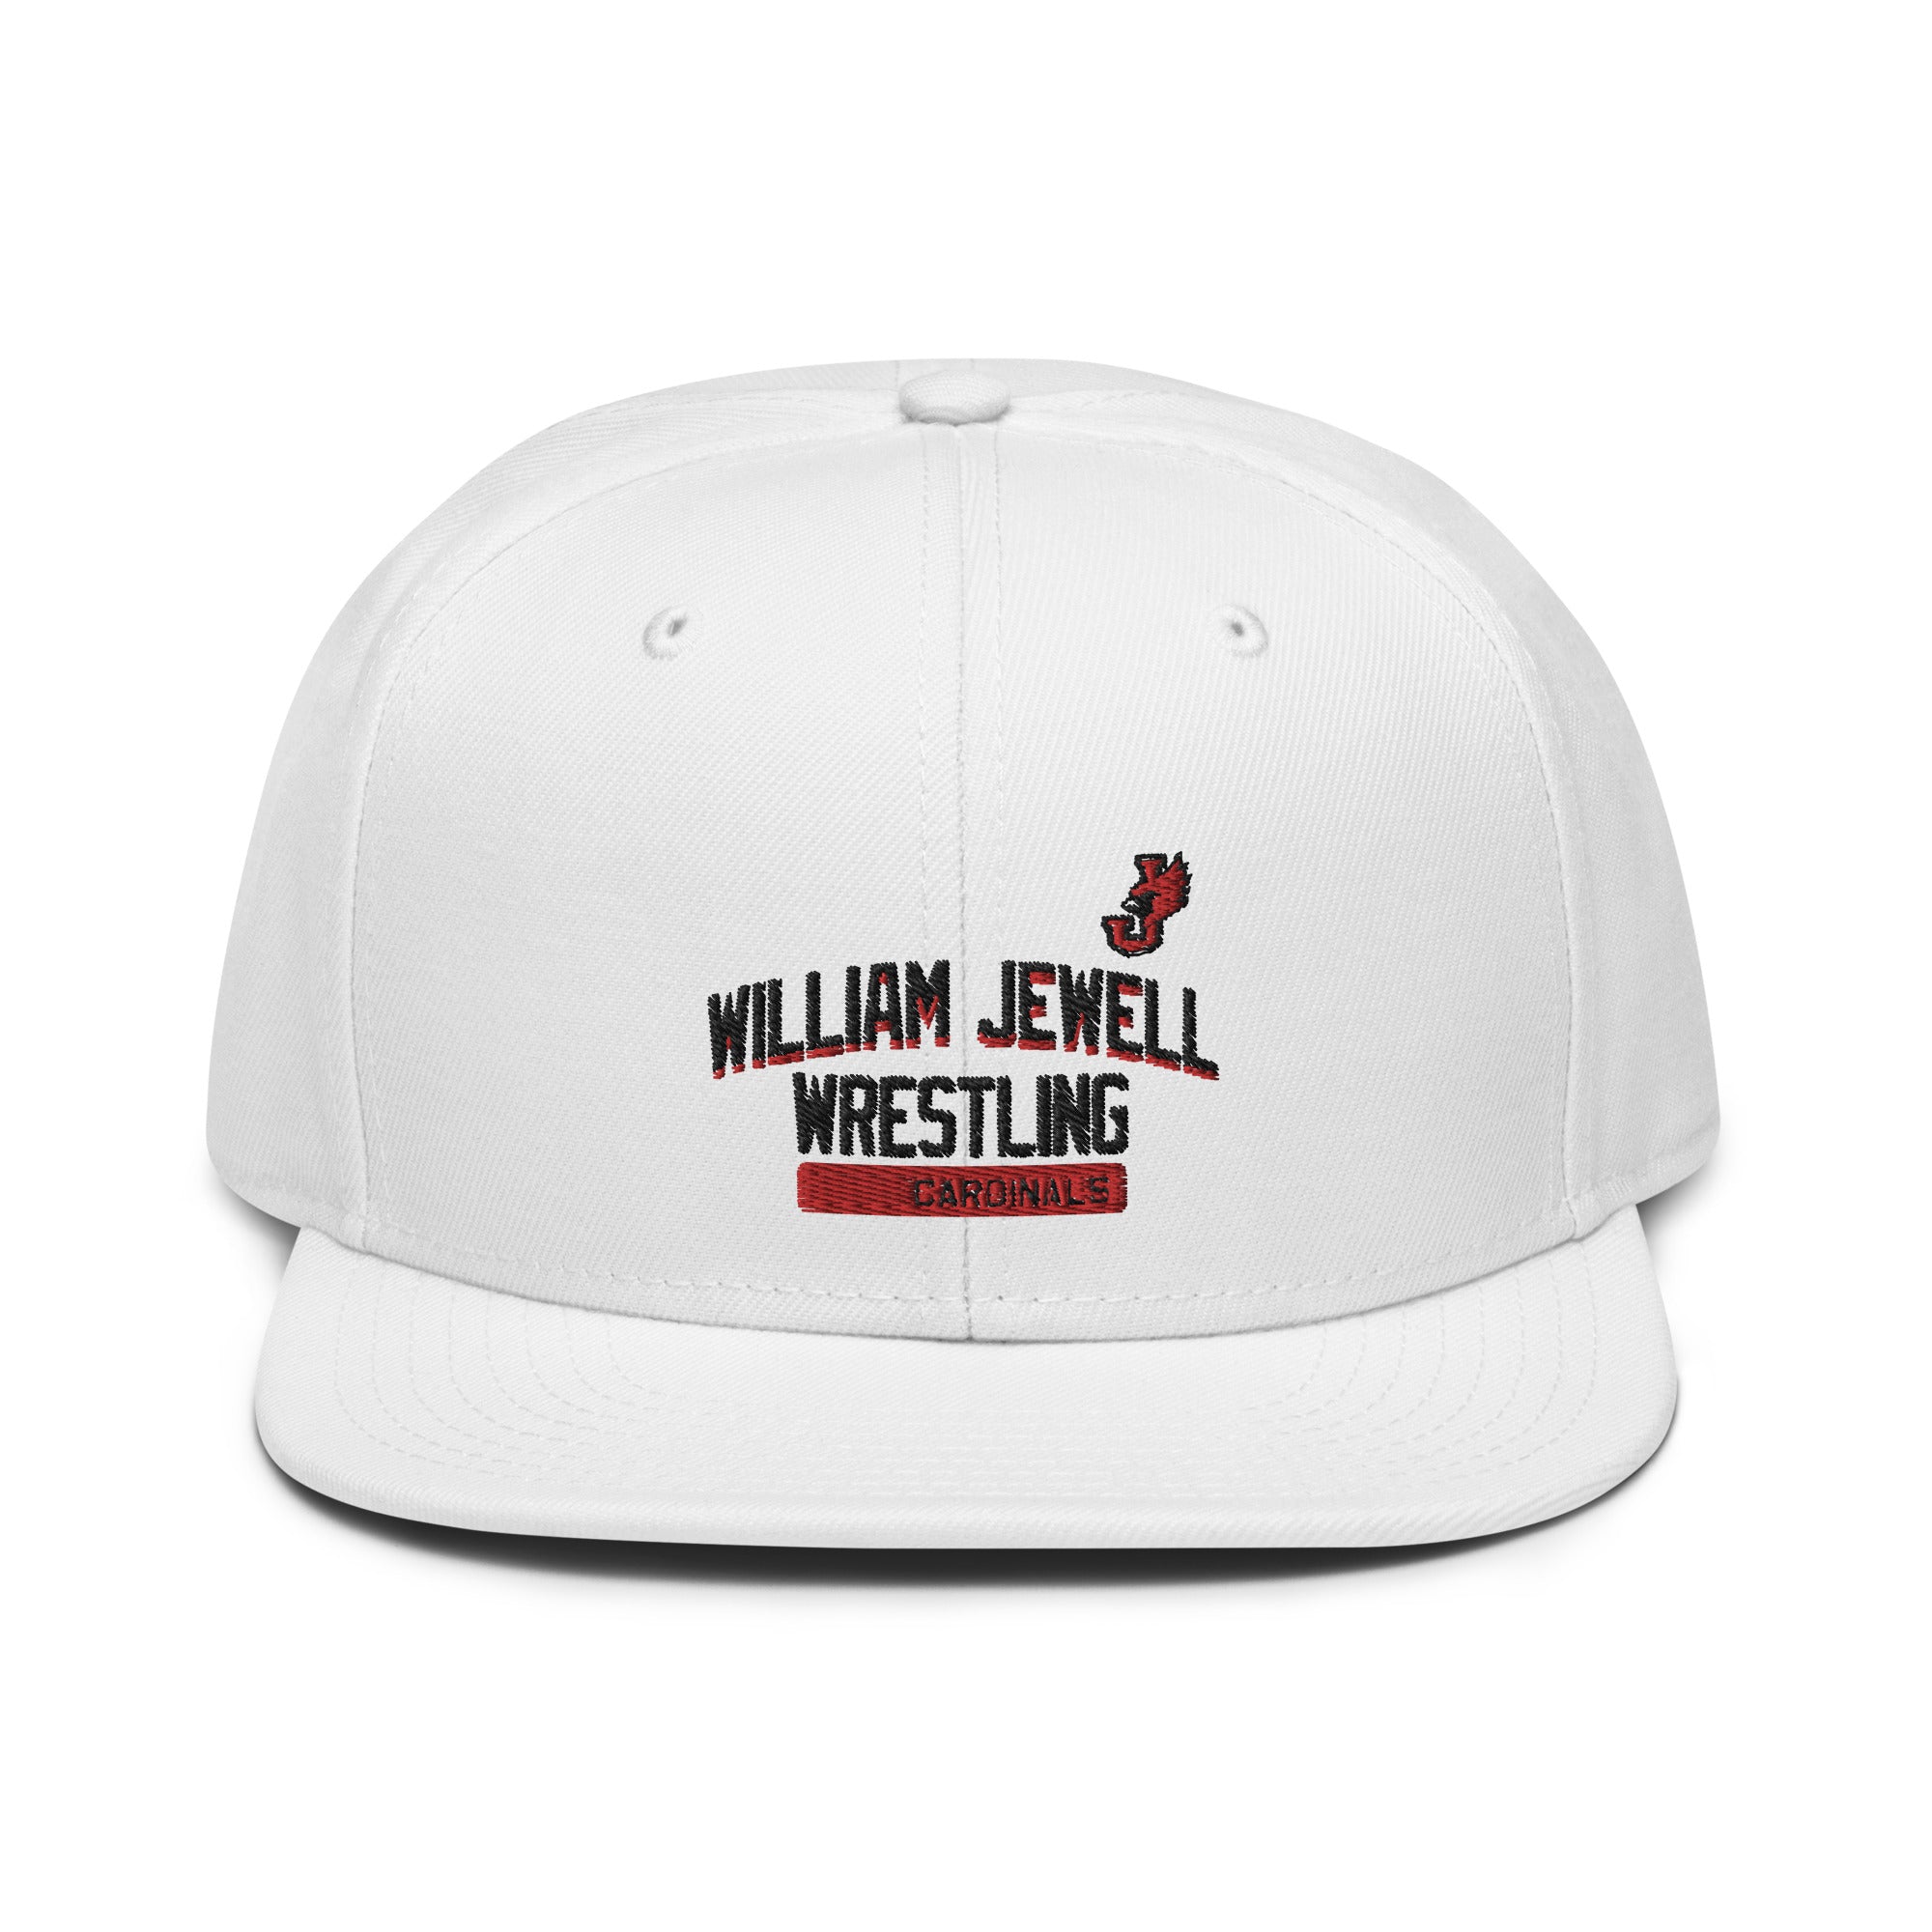 William Jewell Wrestling Snapback Hat